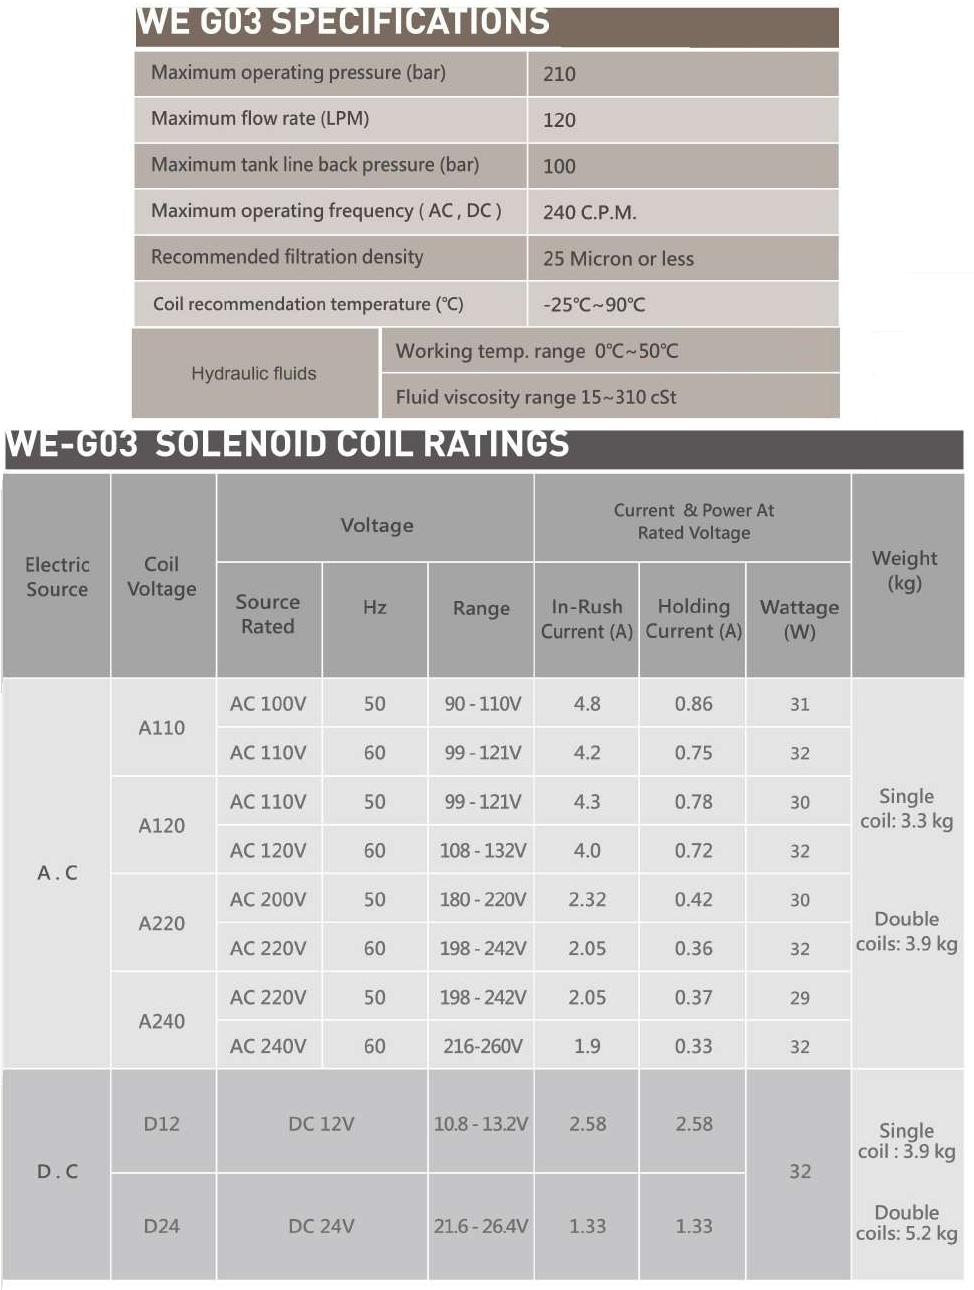 CML High Back Pressure Type Solenoid Valve WE Specification